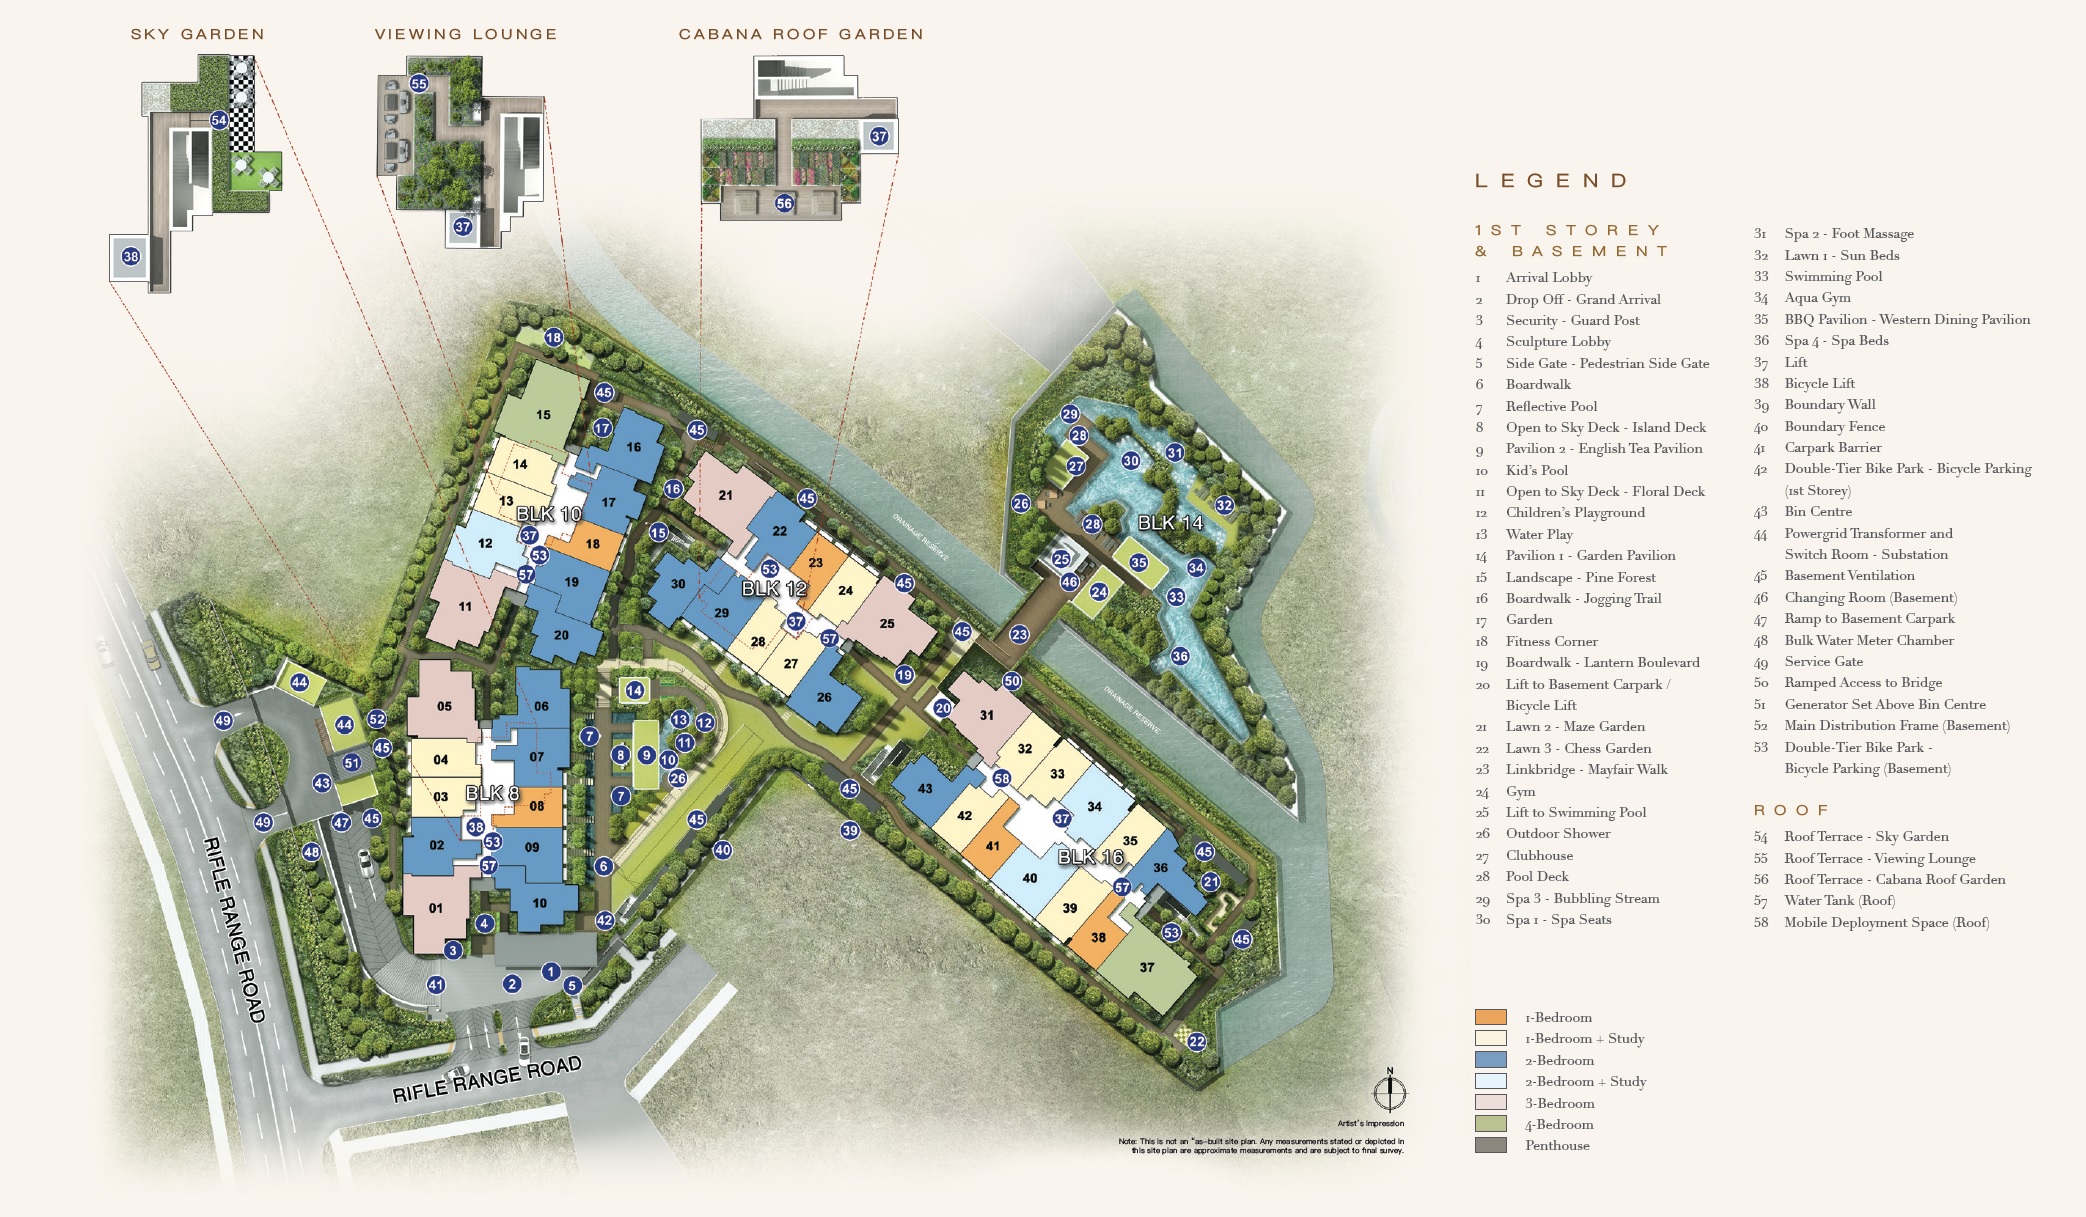 Mayfair Gardens site plan